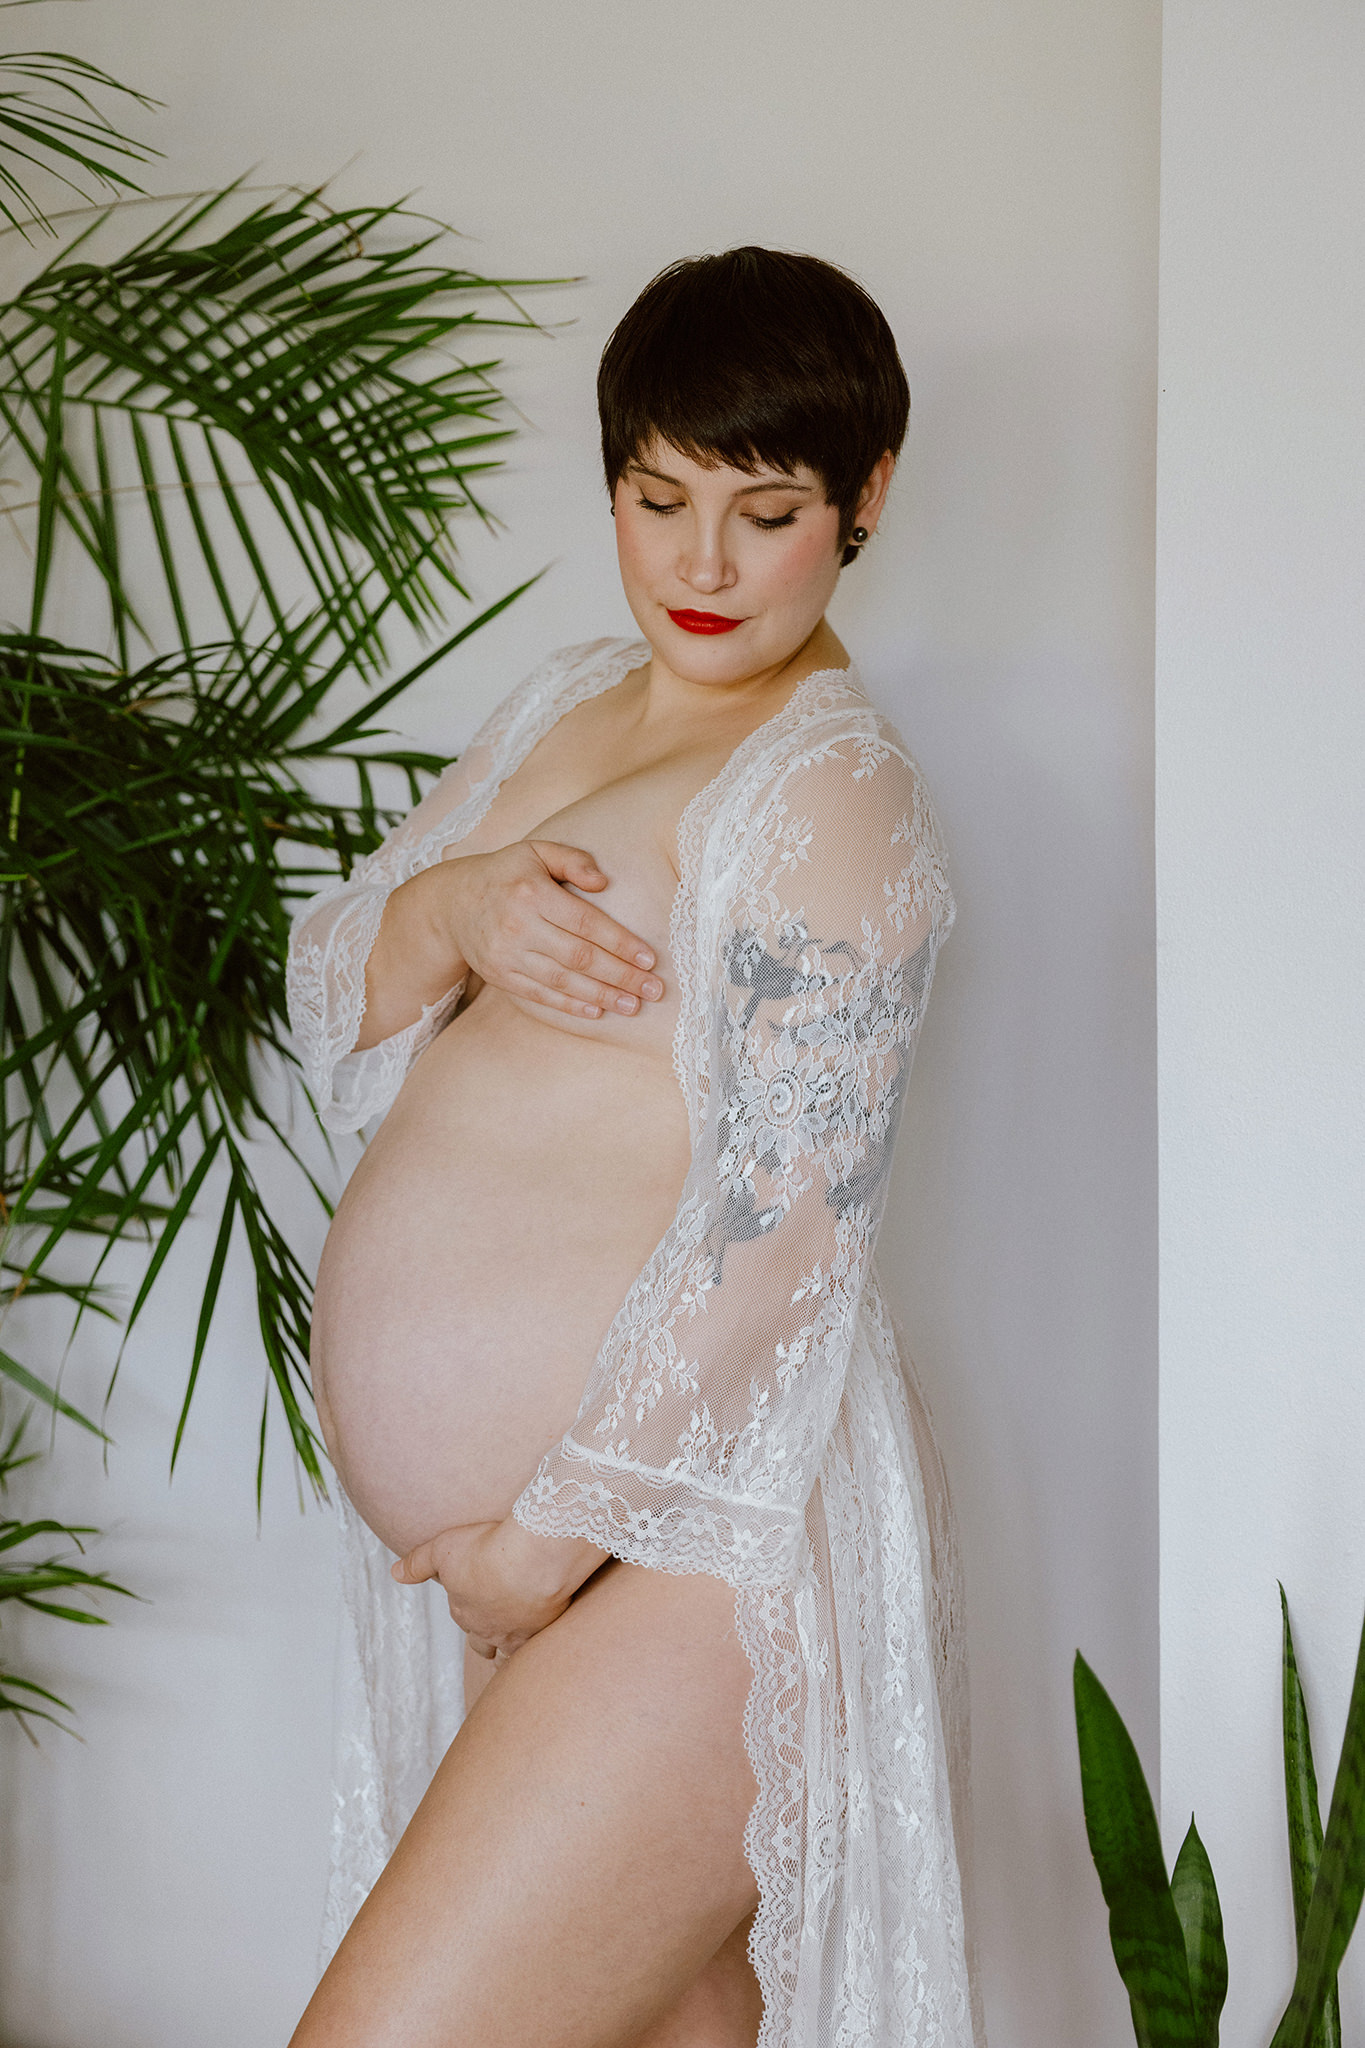 Moody boudoir maternity photo